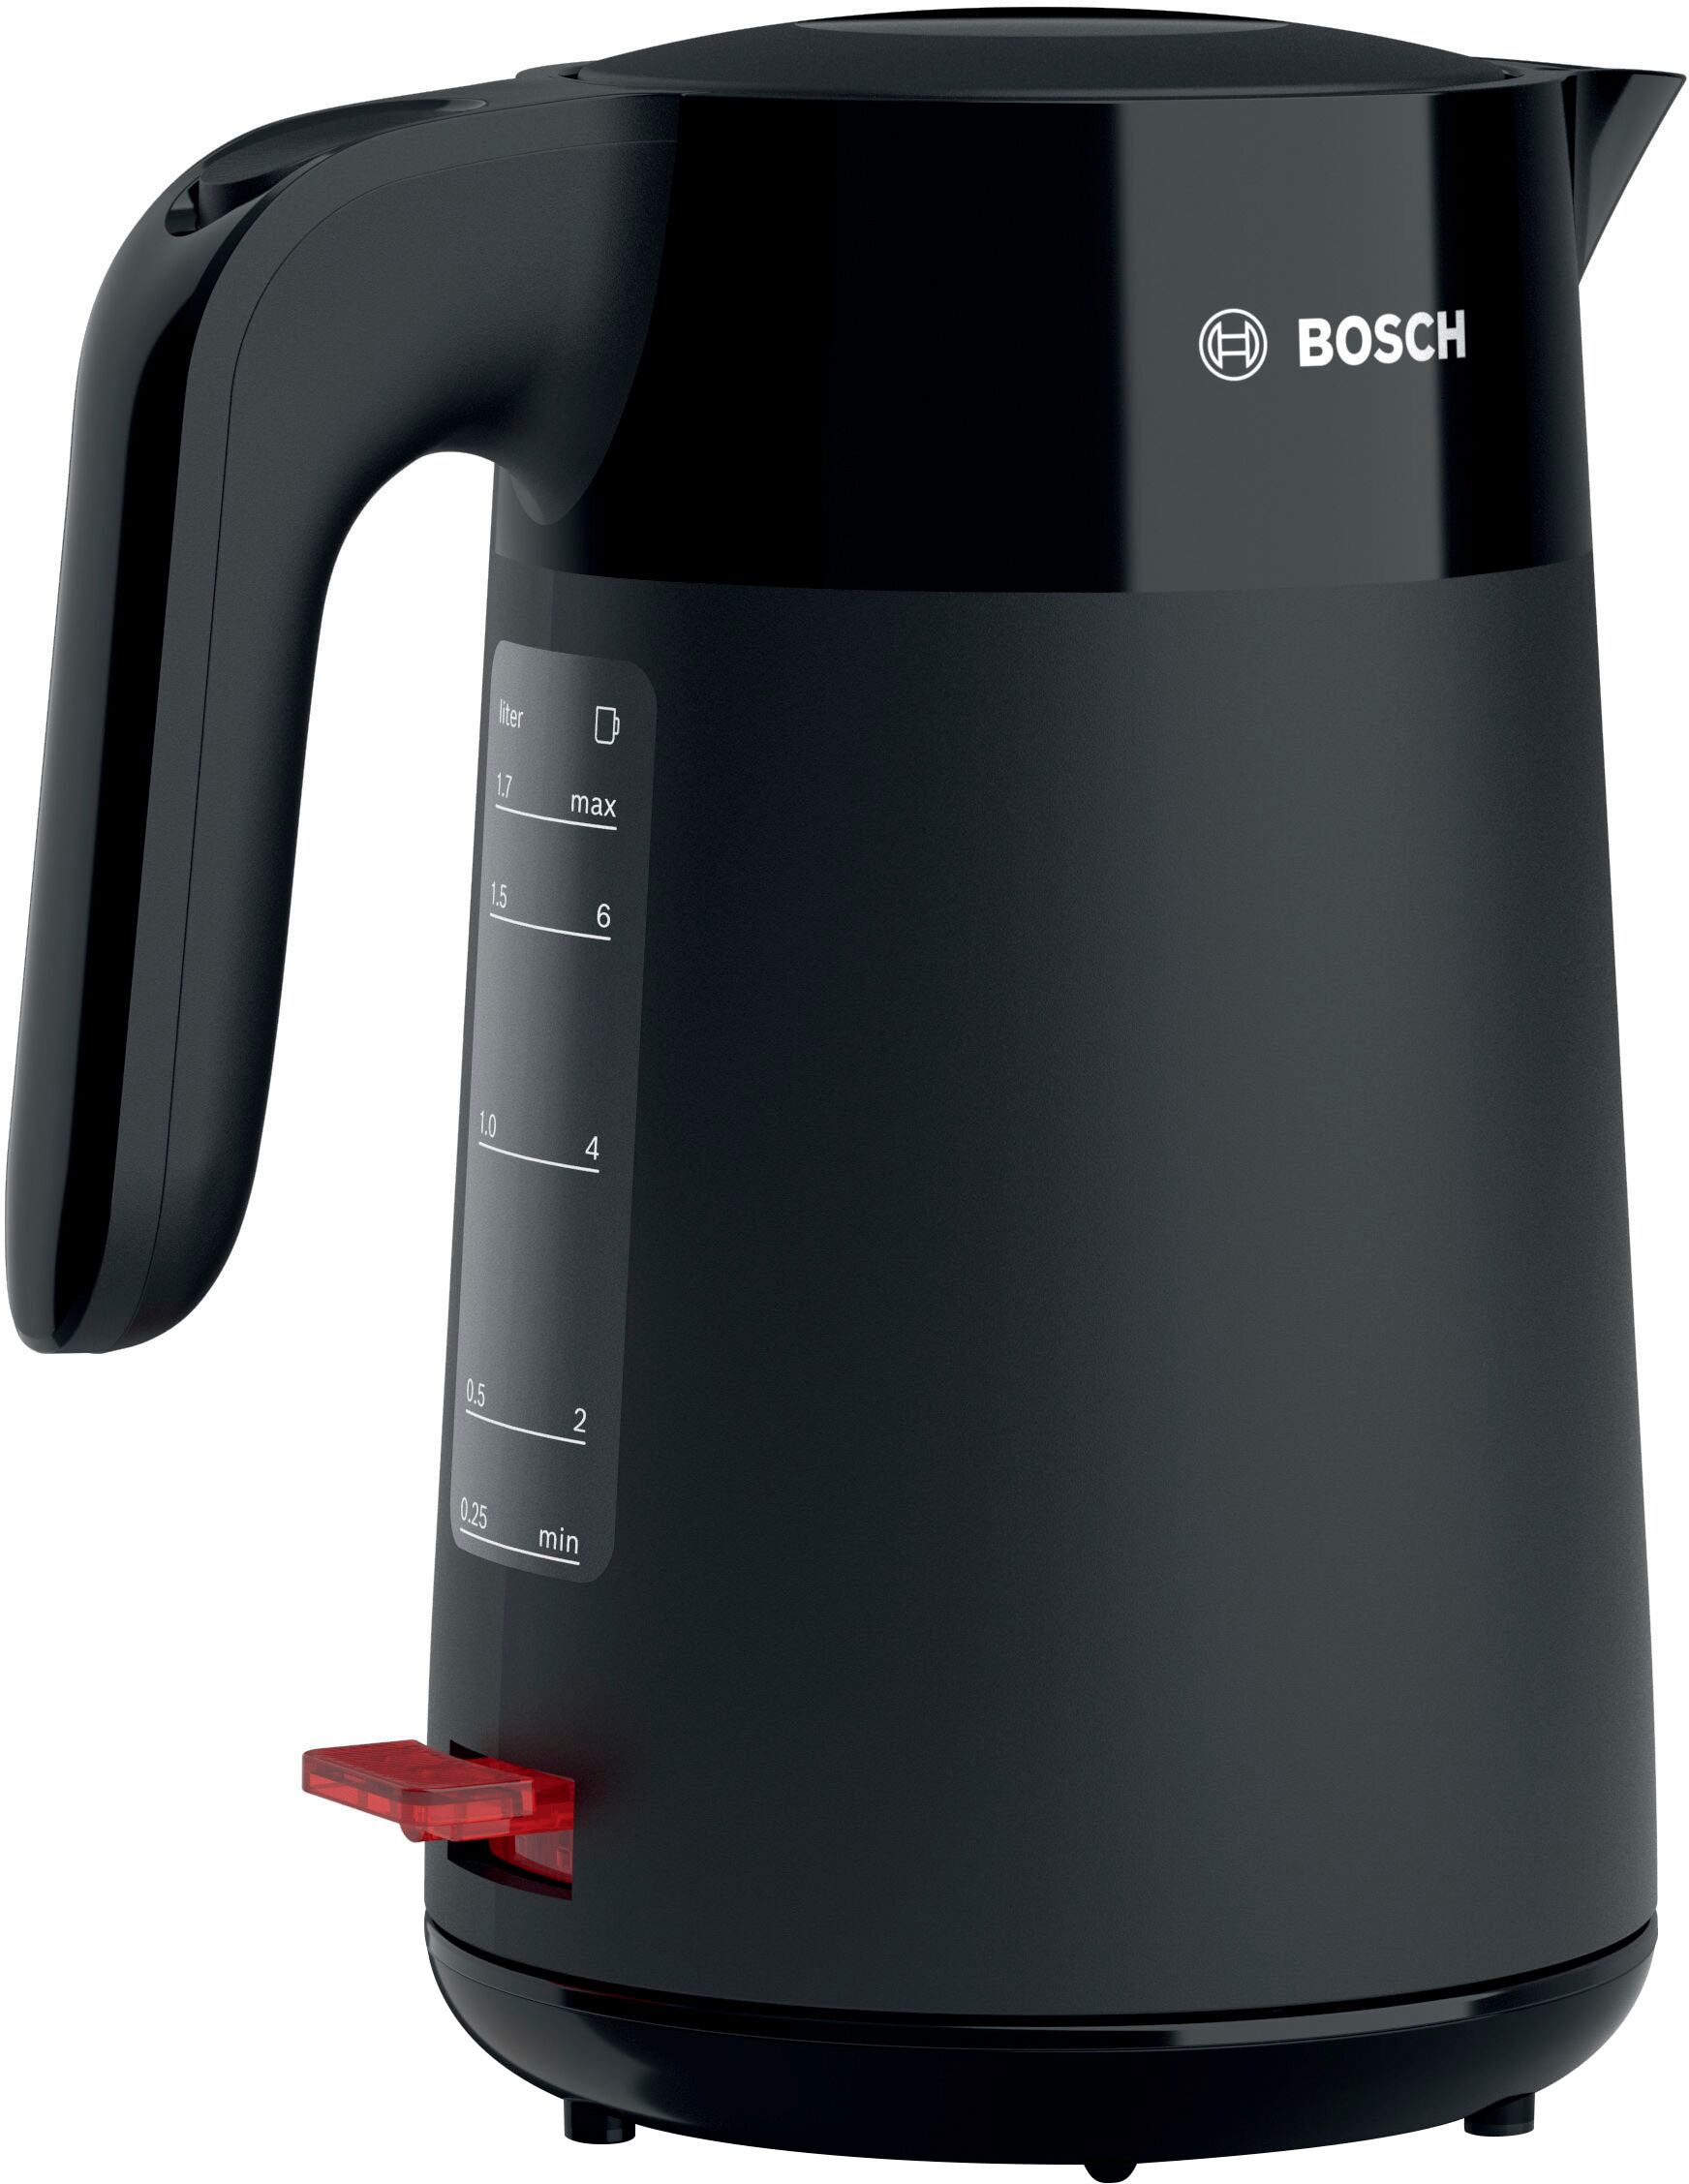 Wasserkocher Bosch jetzt ❤